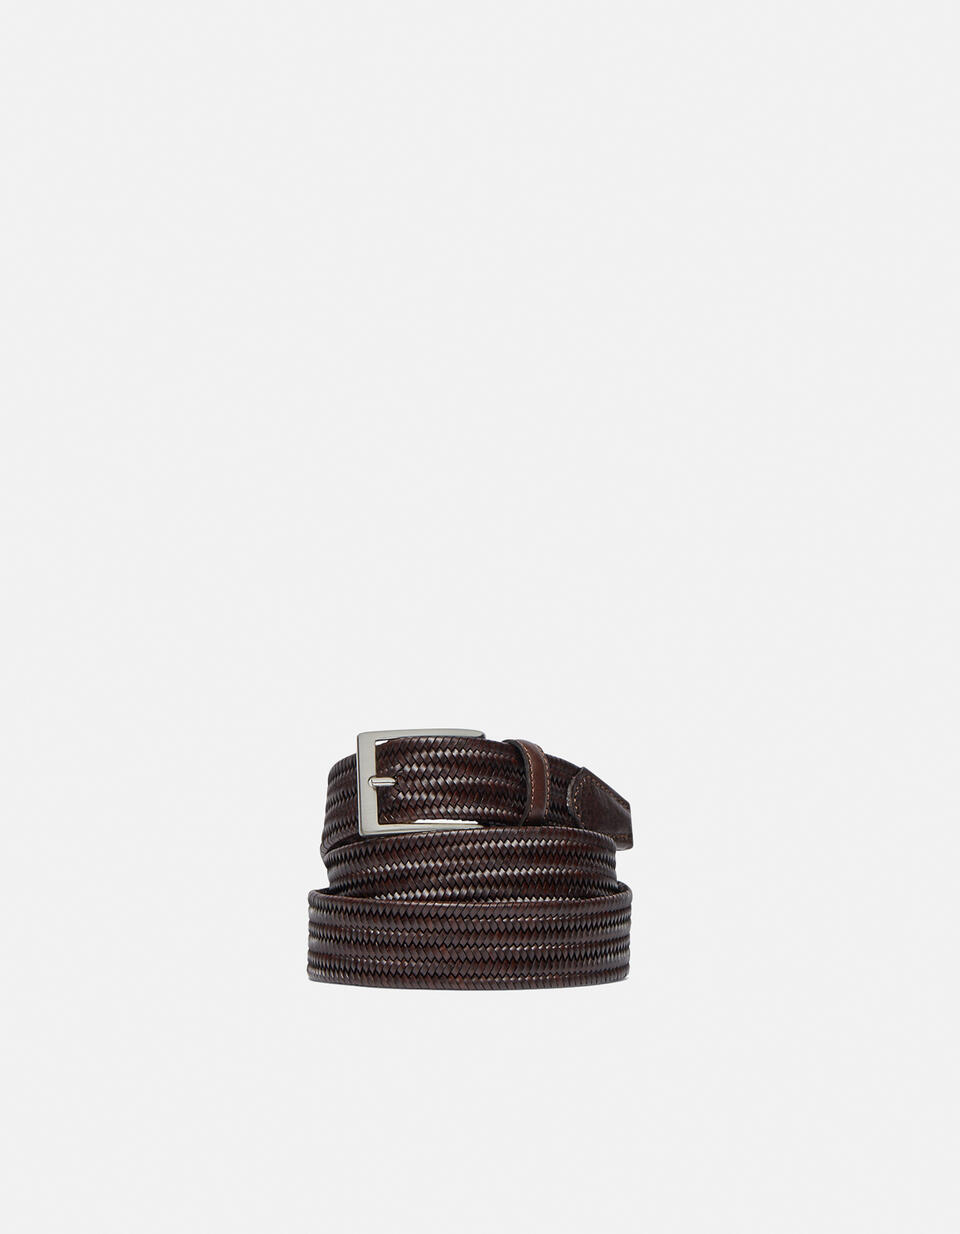 ELASTICISED BELT Dark brown  - Men Belts - Belts - Cuoieria Fiorentina